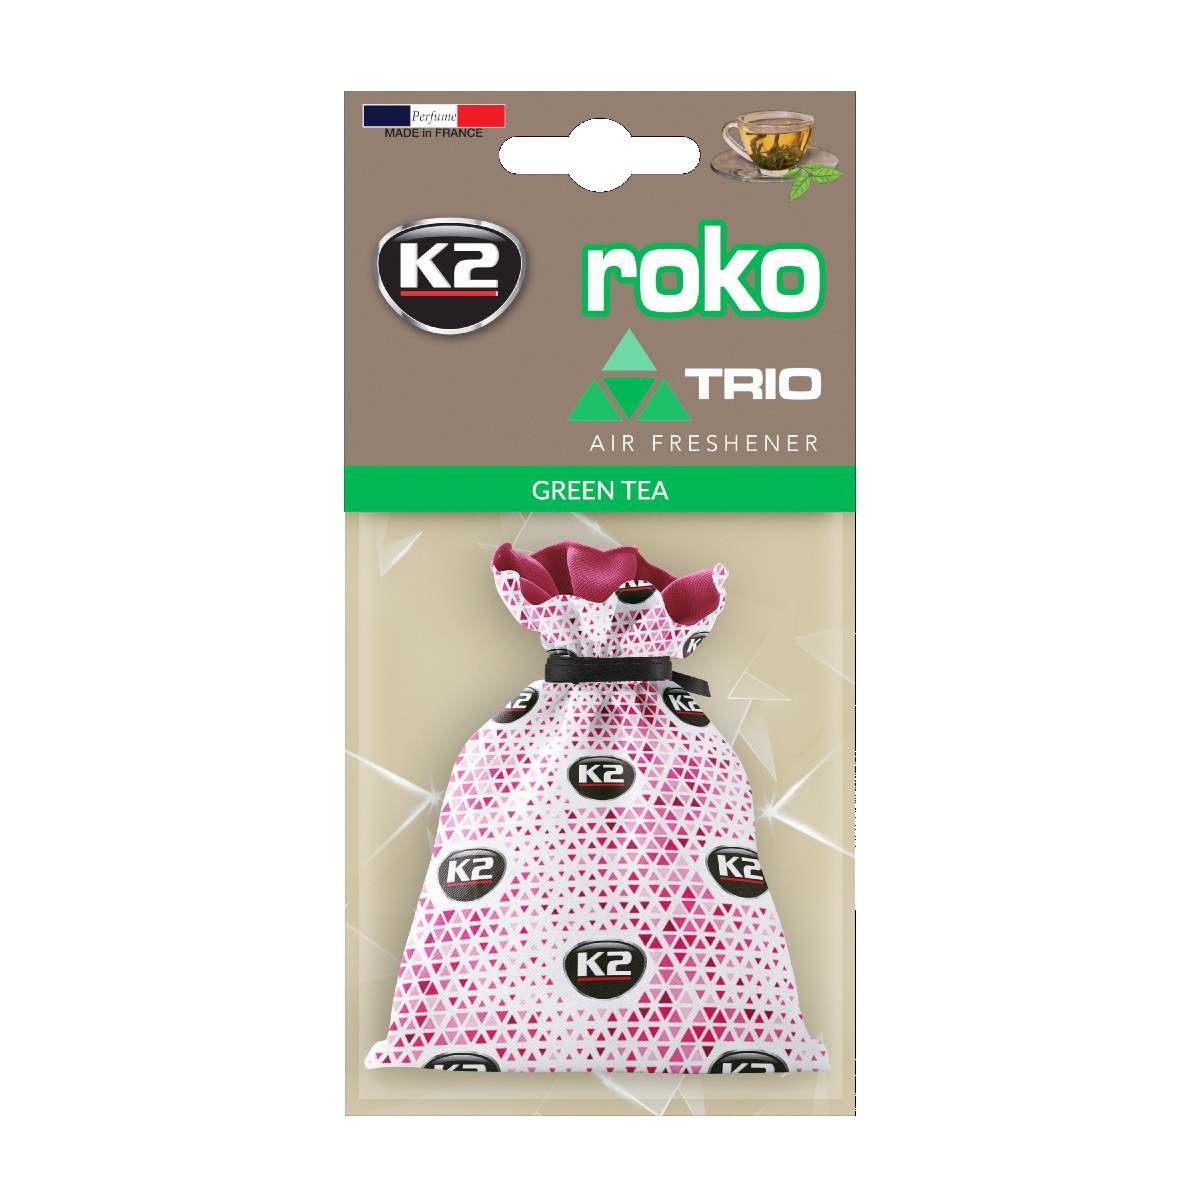 Air fresheners Air freshener ROKO TRIO Green Tea 25G  Art. K2V822T